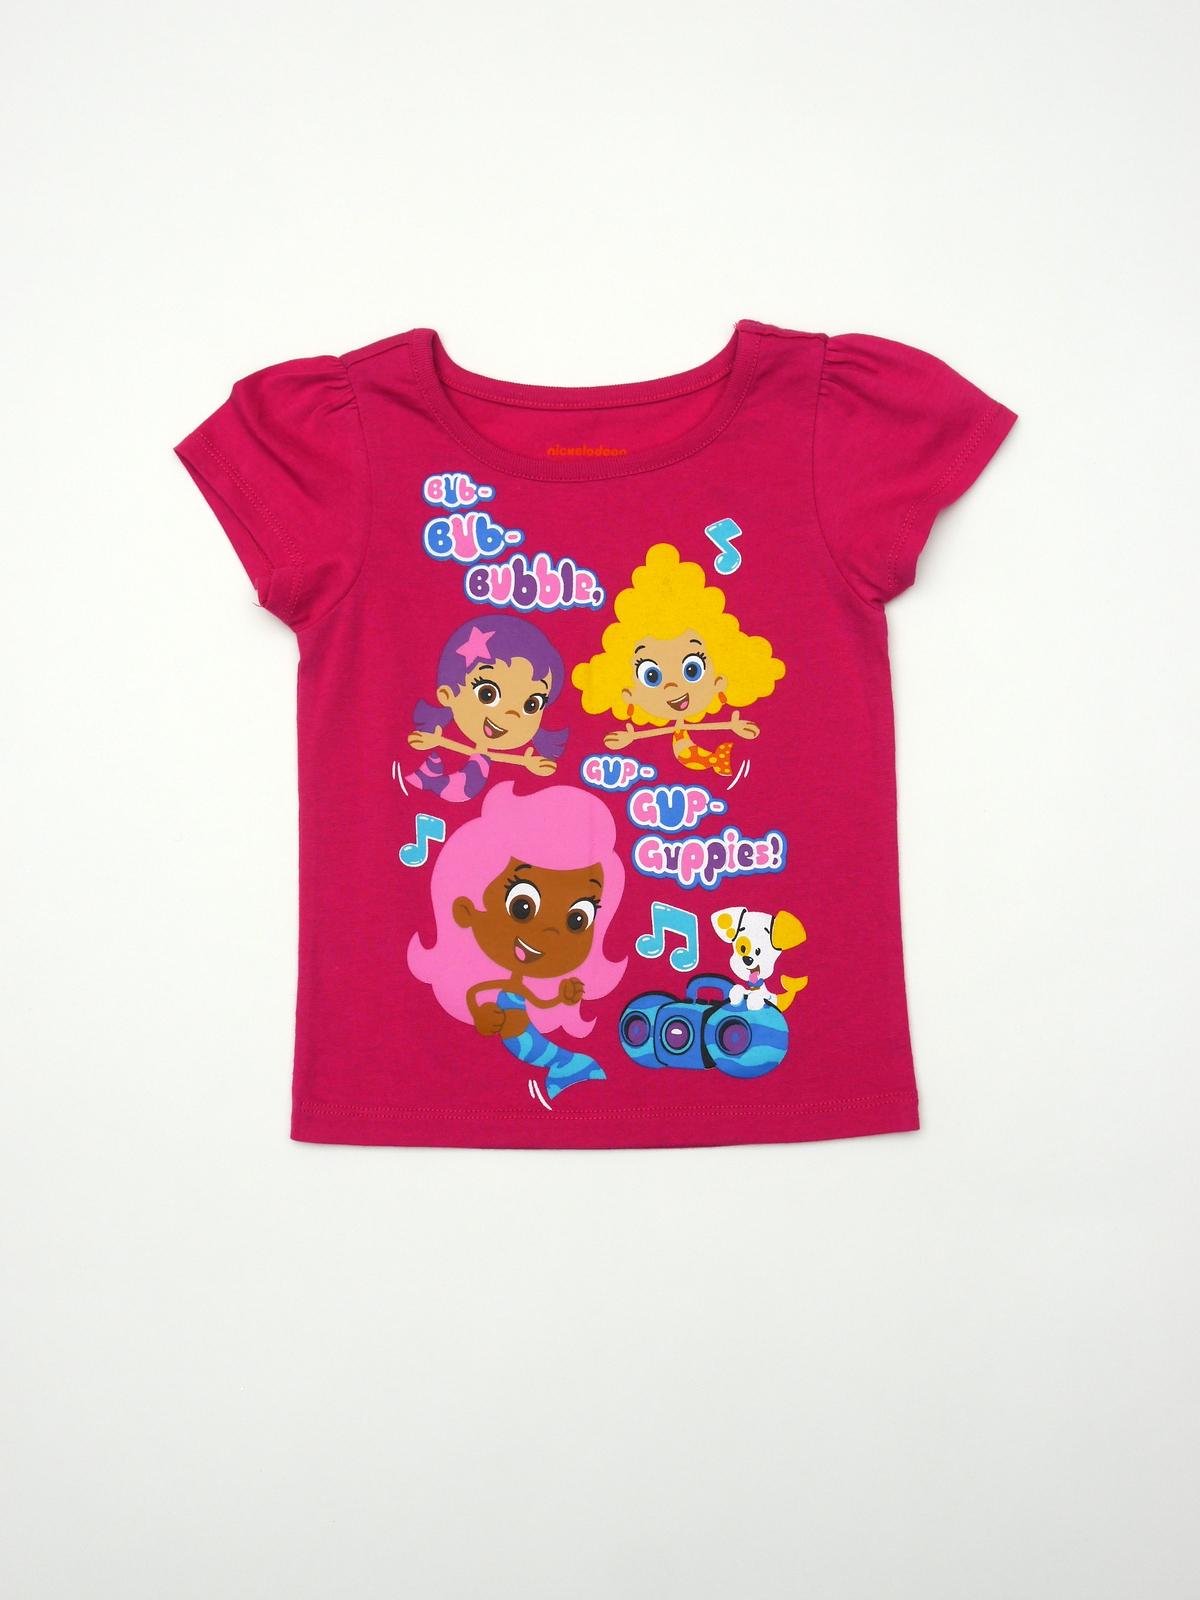 Nickelodeon Bubble Guppies Toddler Girl's Cap Sleeve Top